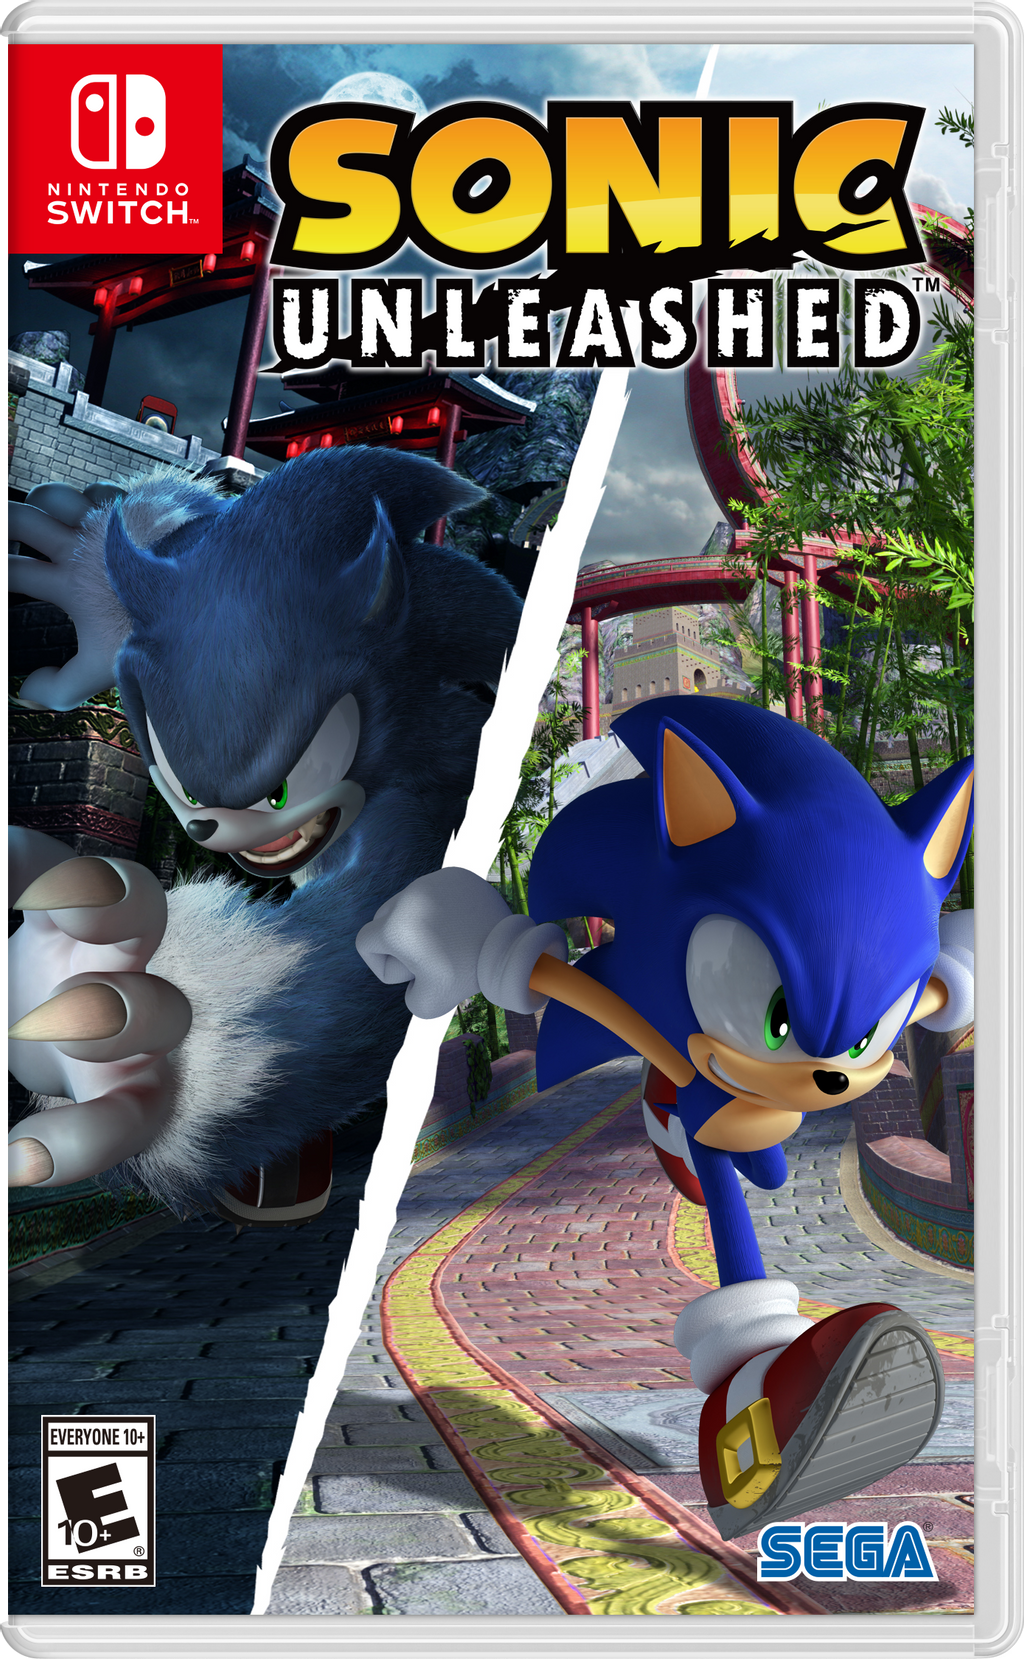 Longplay of Sonic the Hedgehog 3 